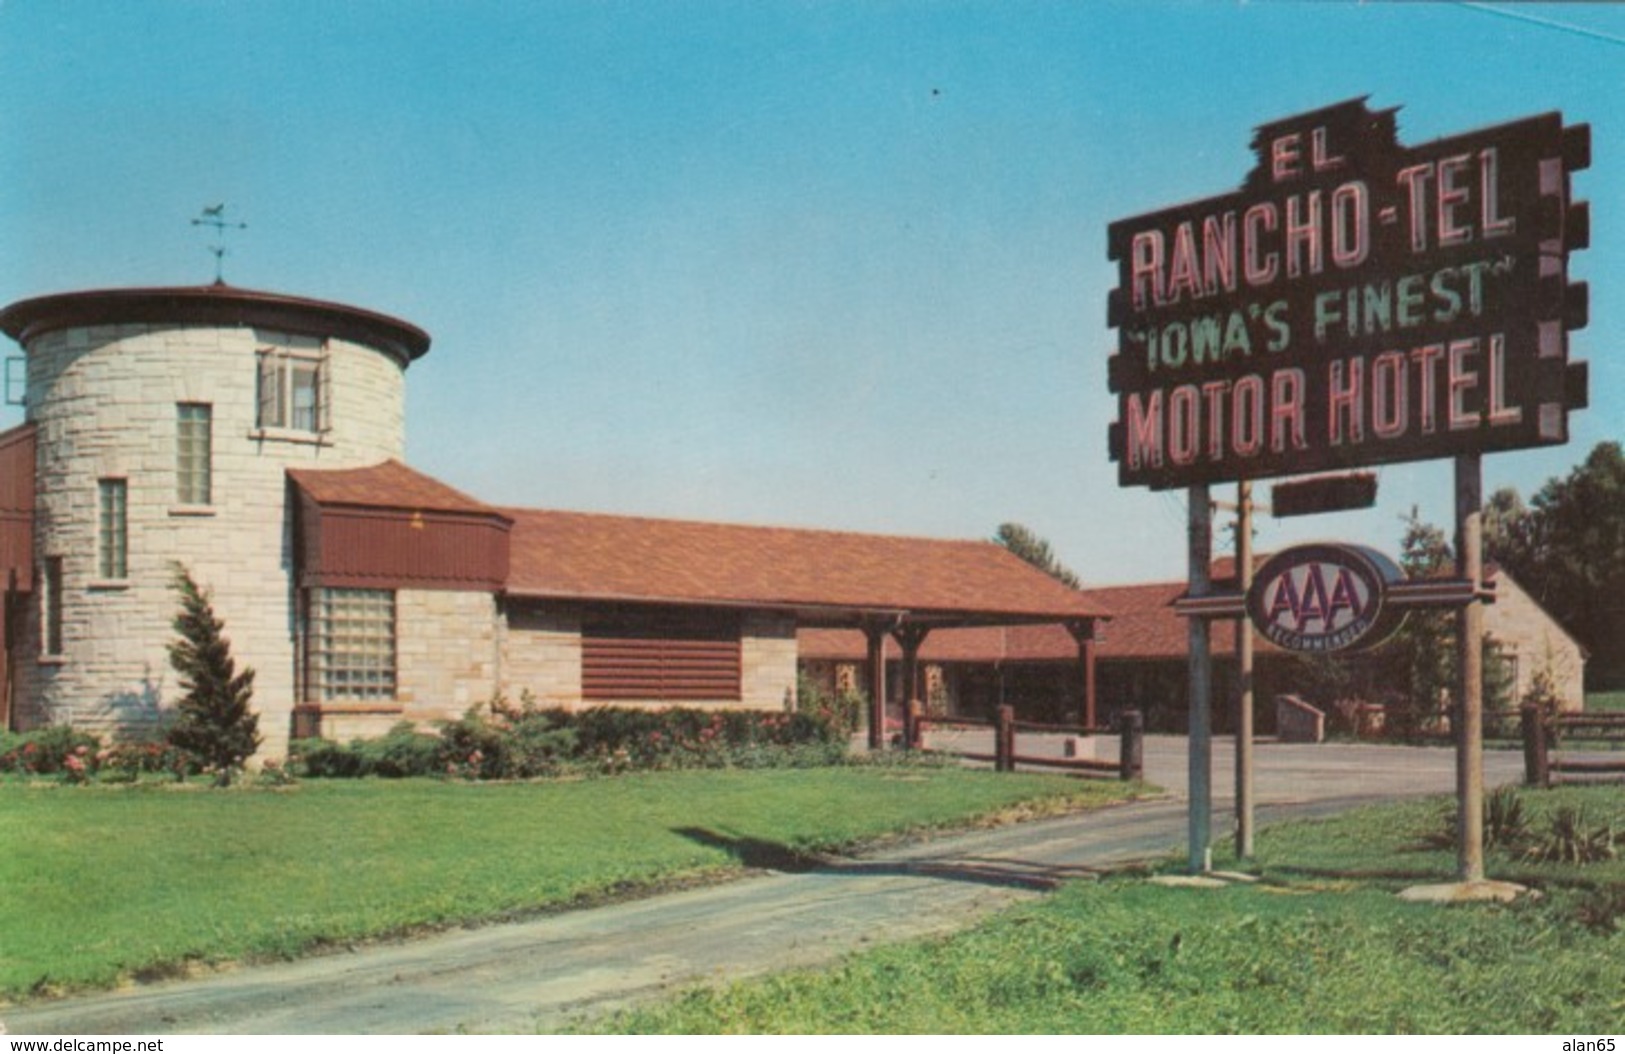 Davenport Iowa, El Rancho-Tel Motor Hotel Motel Loding Across From Duck Creek Golf Course, C1950s/60s Vintage Postcard - Davenport